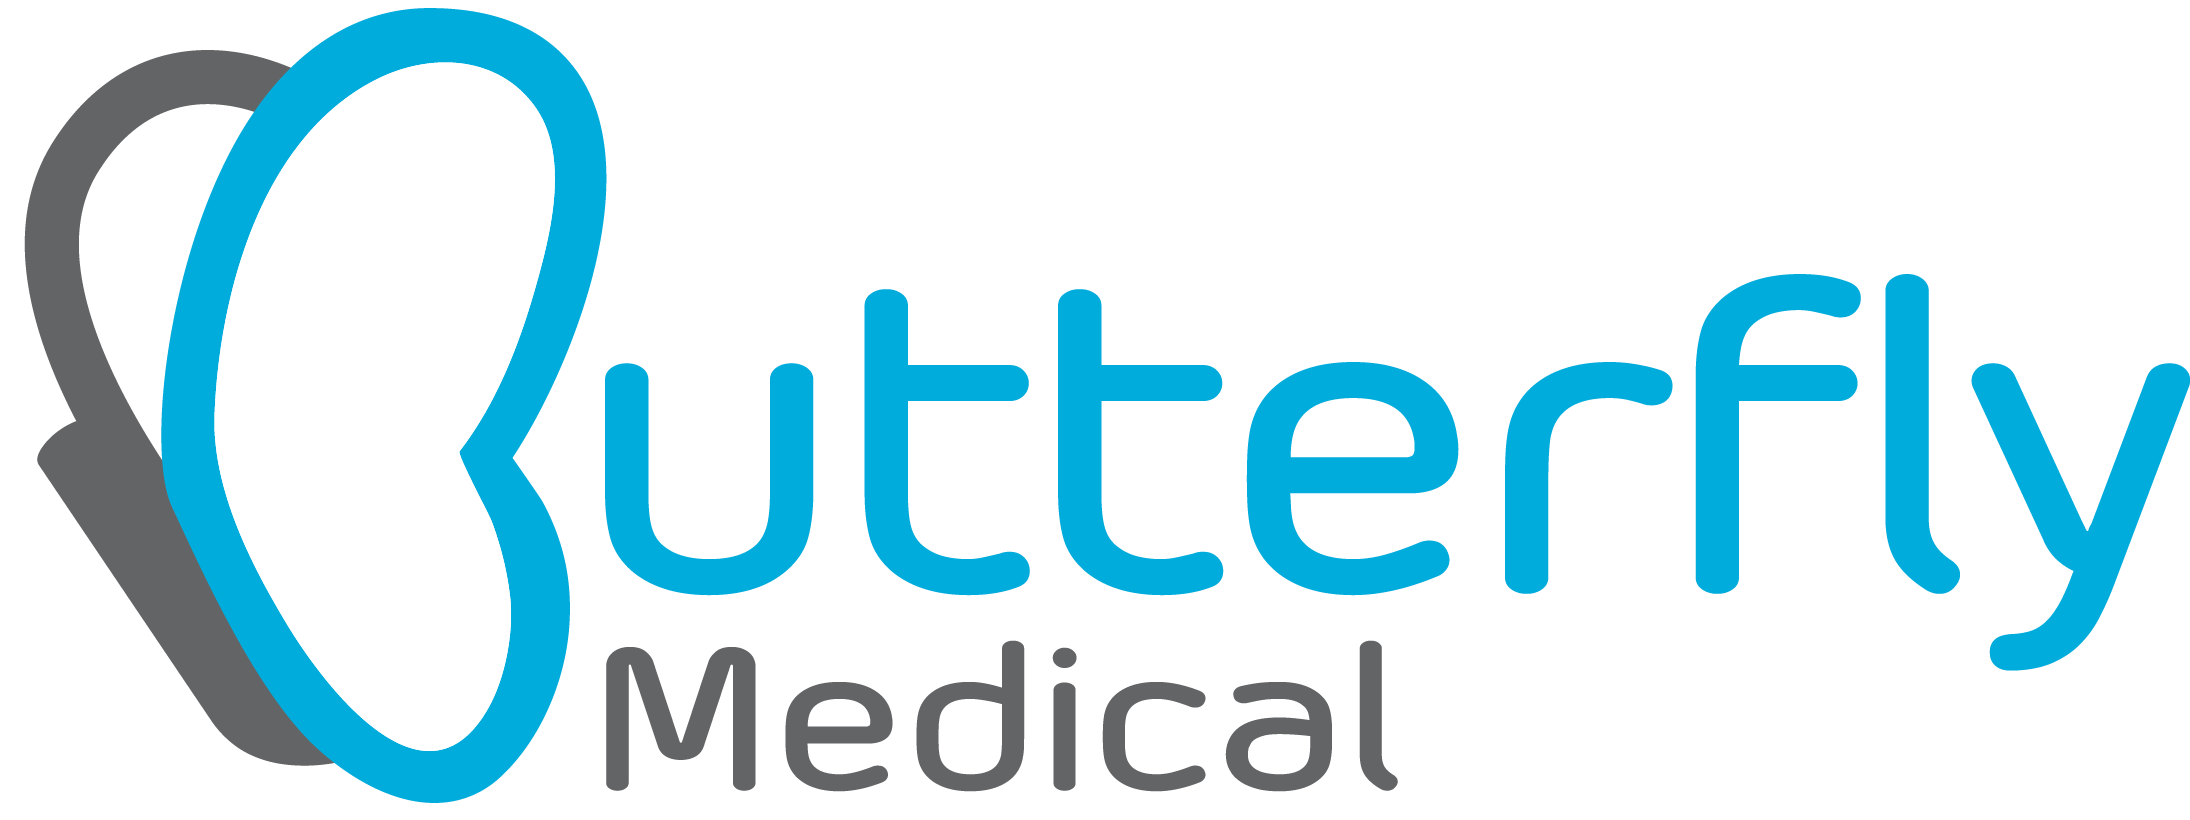 Butterfly Medical logo